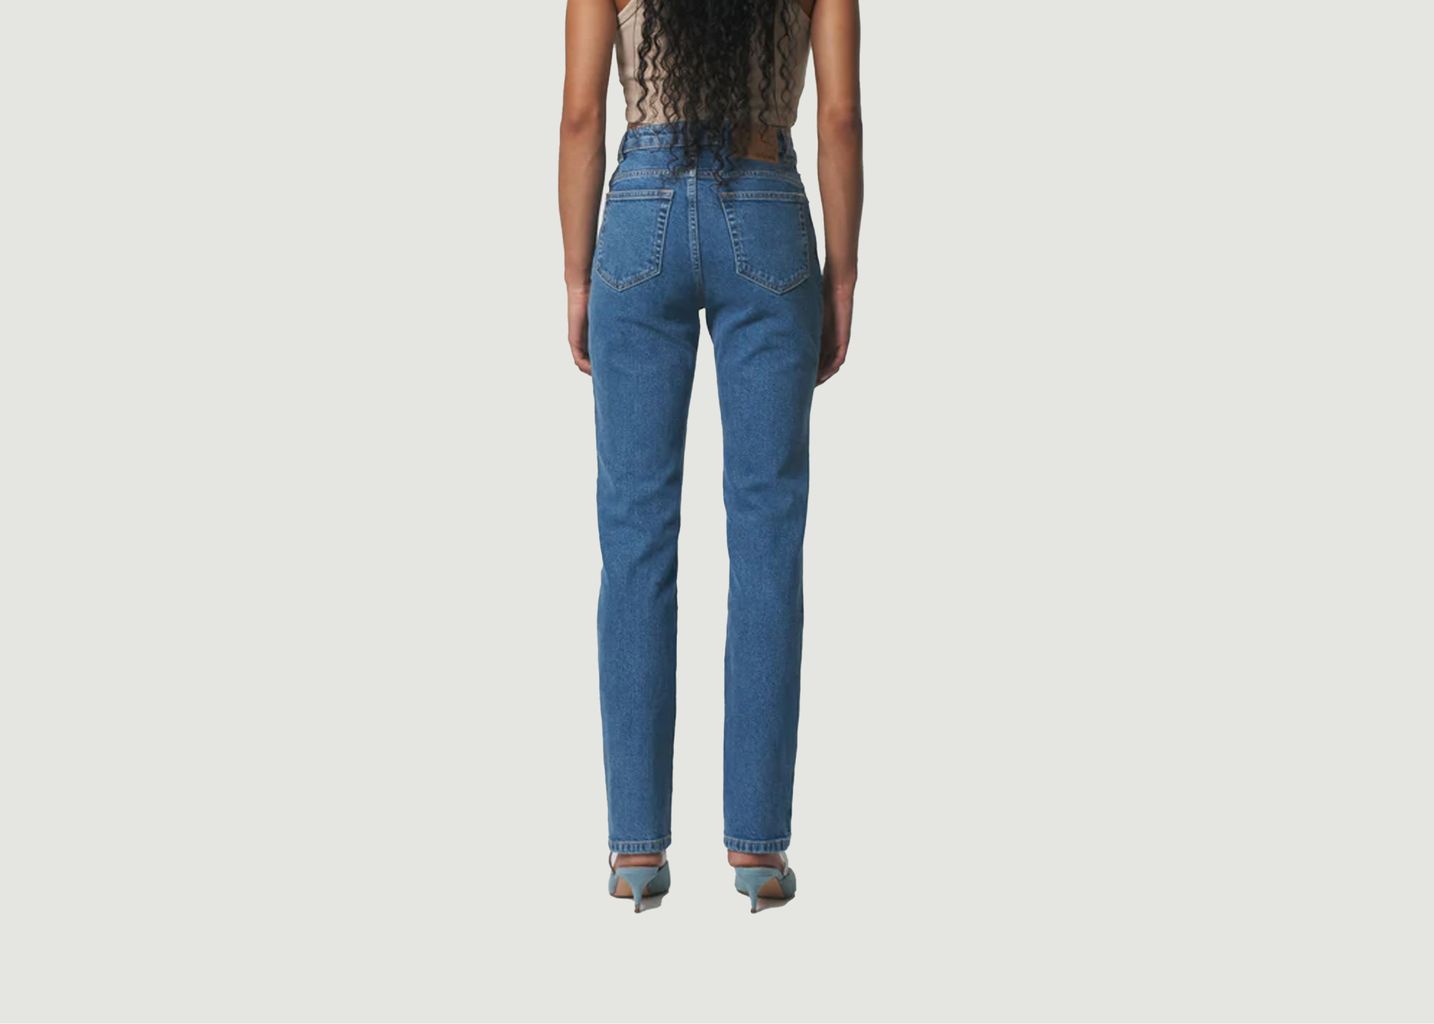 Die Straight Jeans  - Annie Jeans